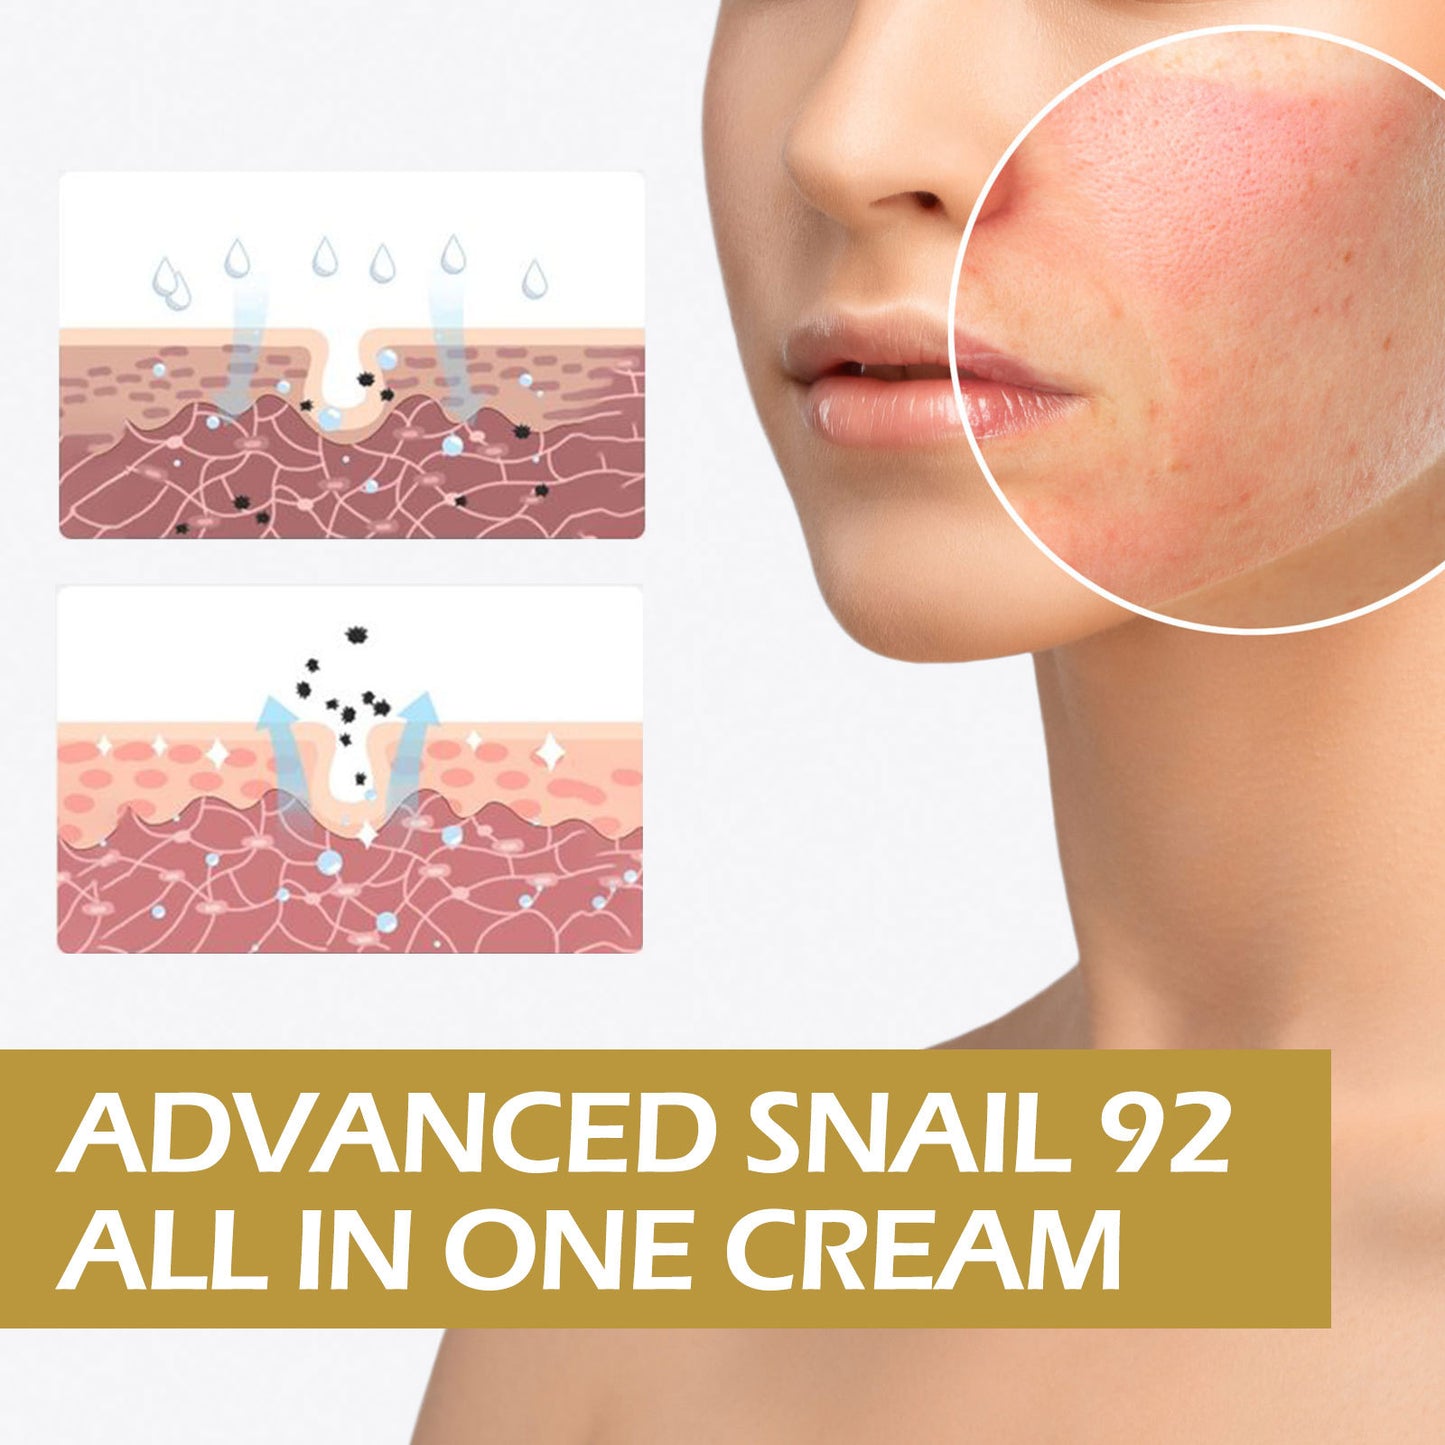 Snail Face Cream Anti Redness Pimple Removal Shrink Pores Repair Sensitive Skin Replenishing Moisturizer Acne Treatment Cream